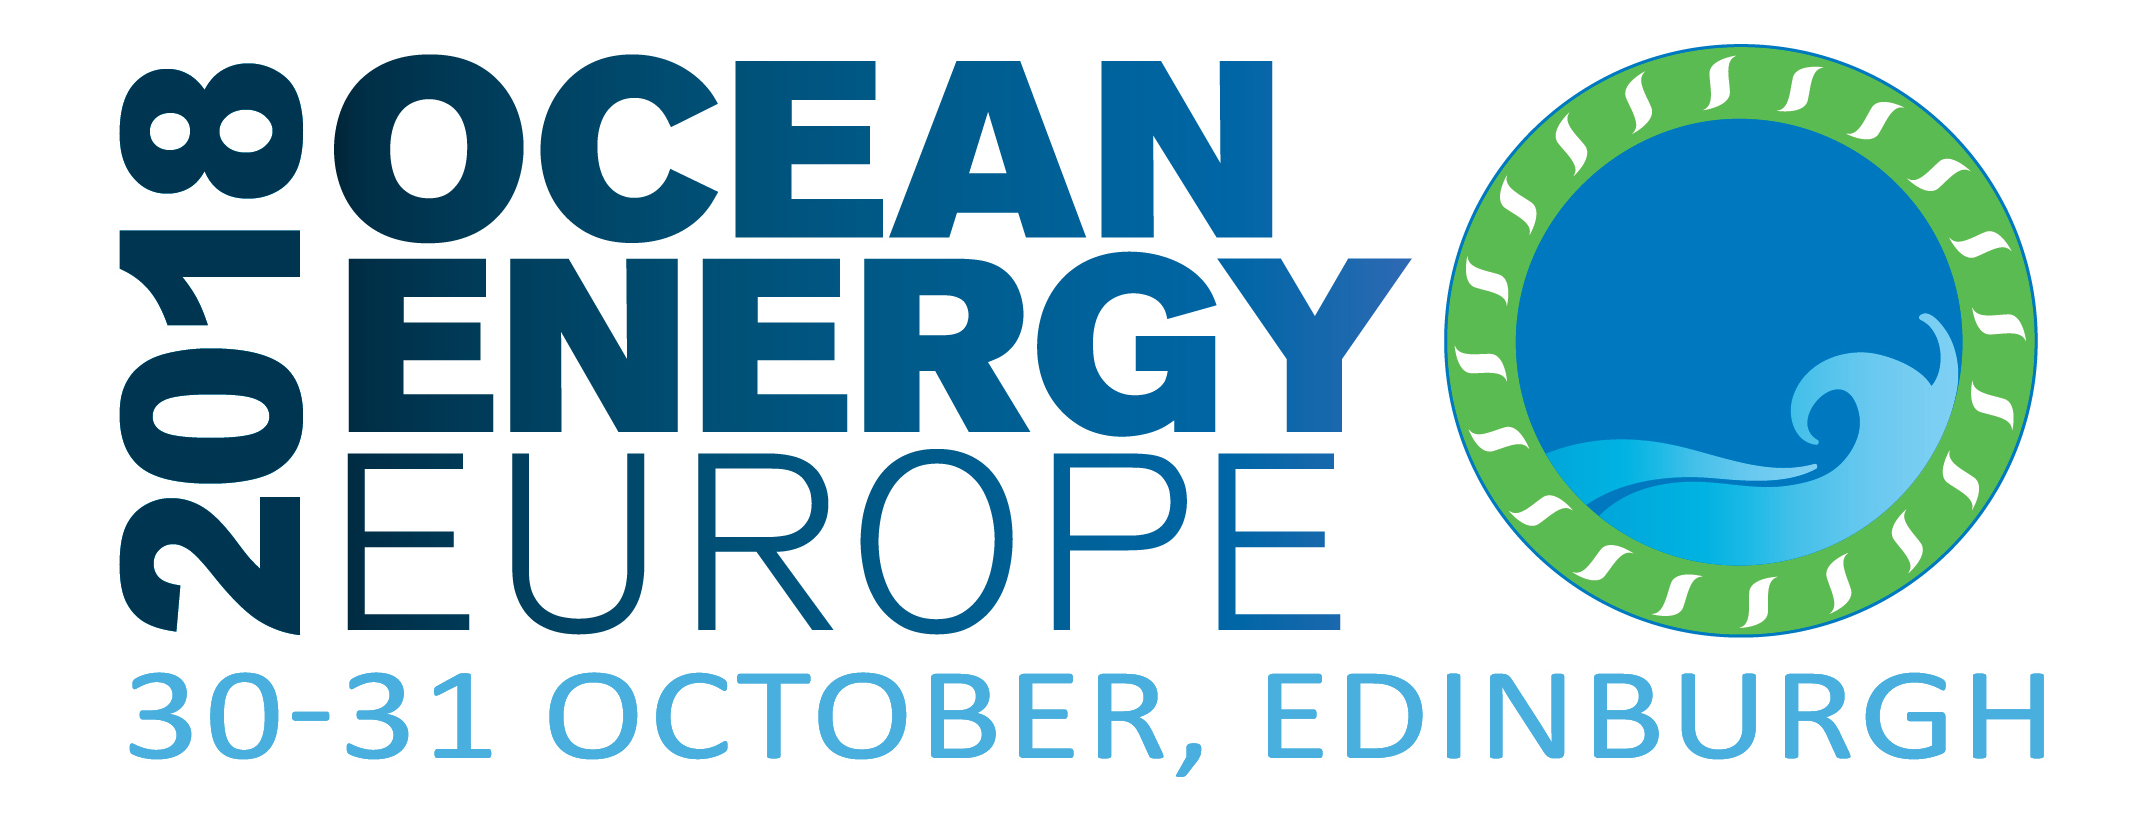 Scotland welcomes Europes ocean energy industry to Edinburgh for OEE2018